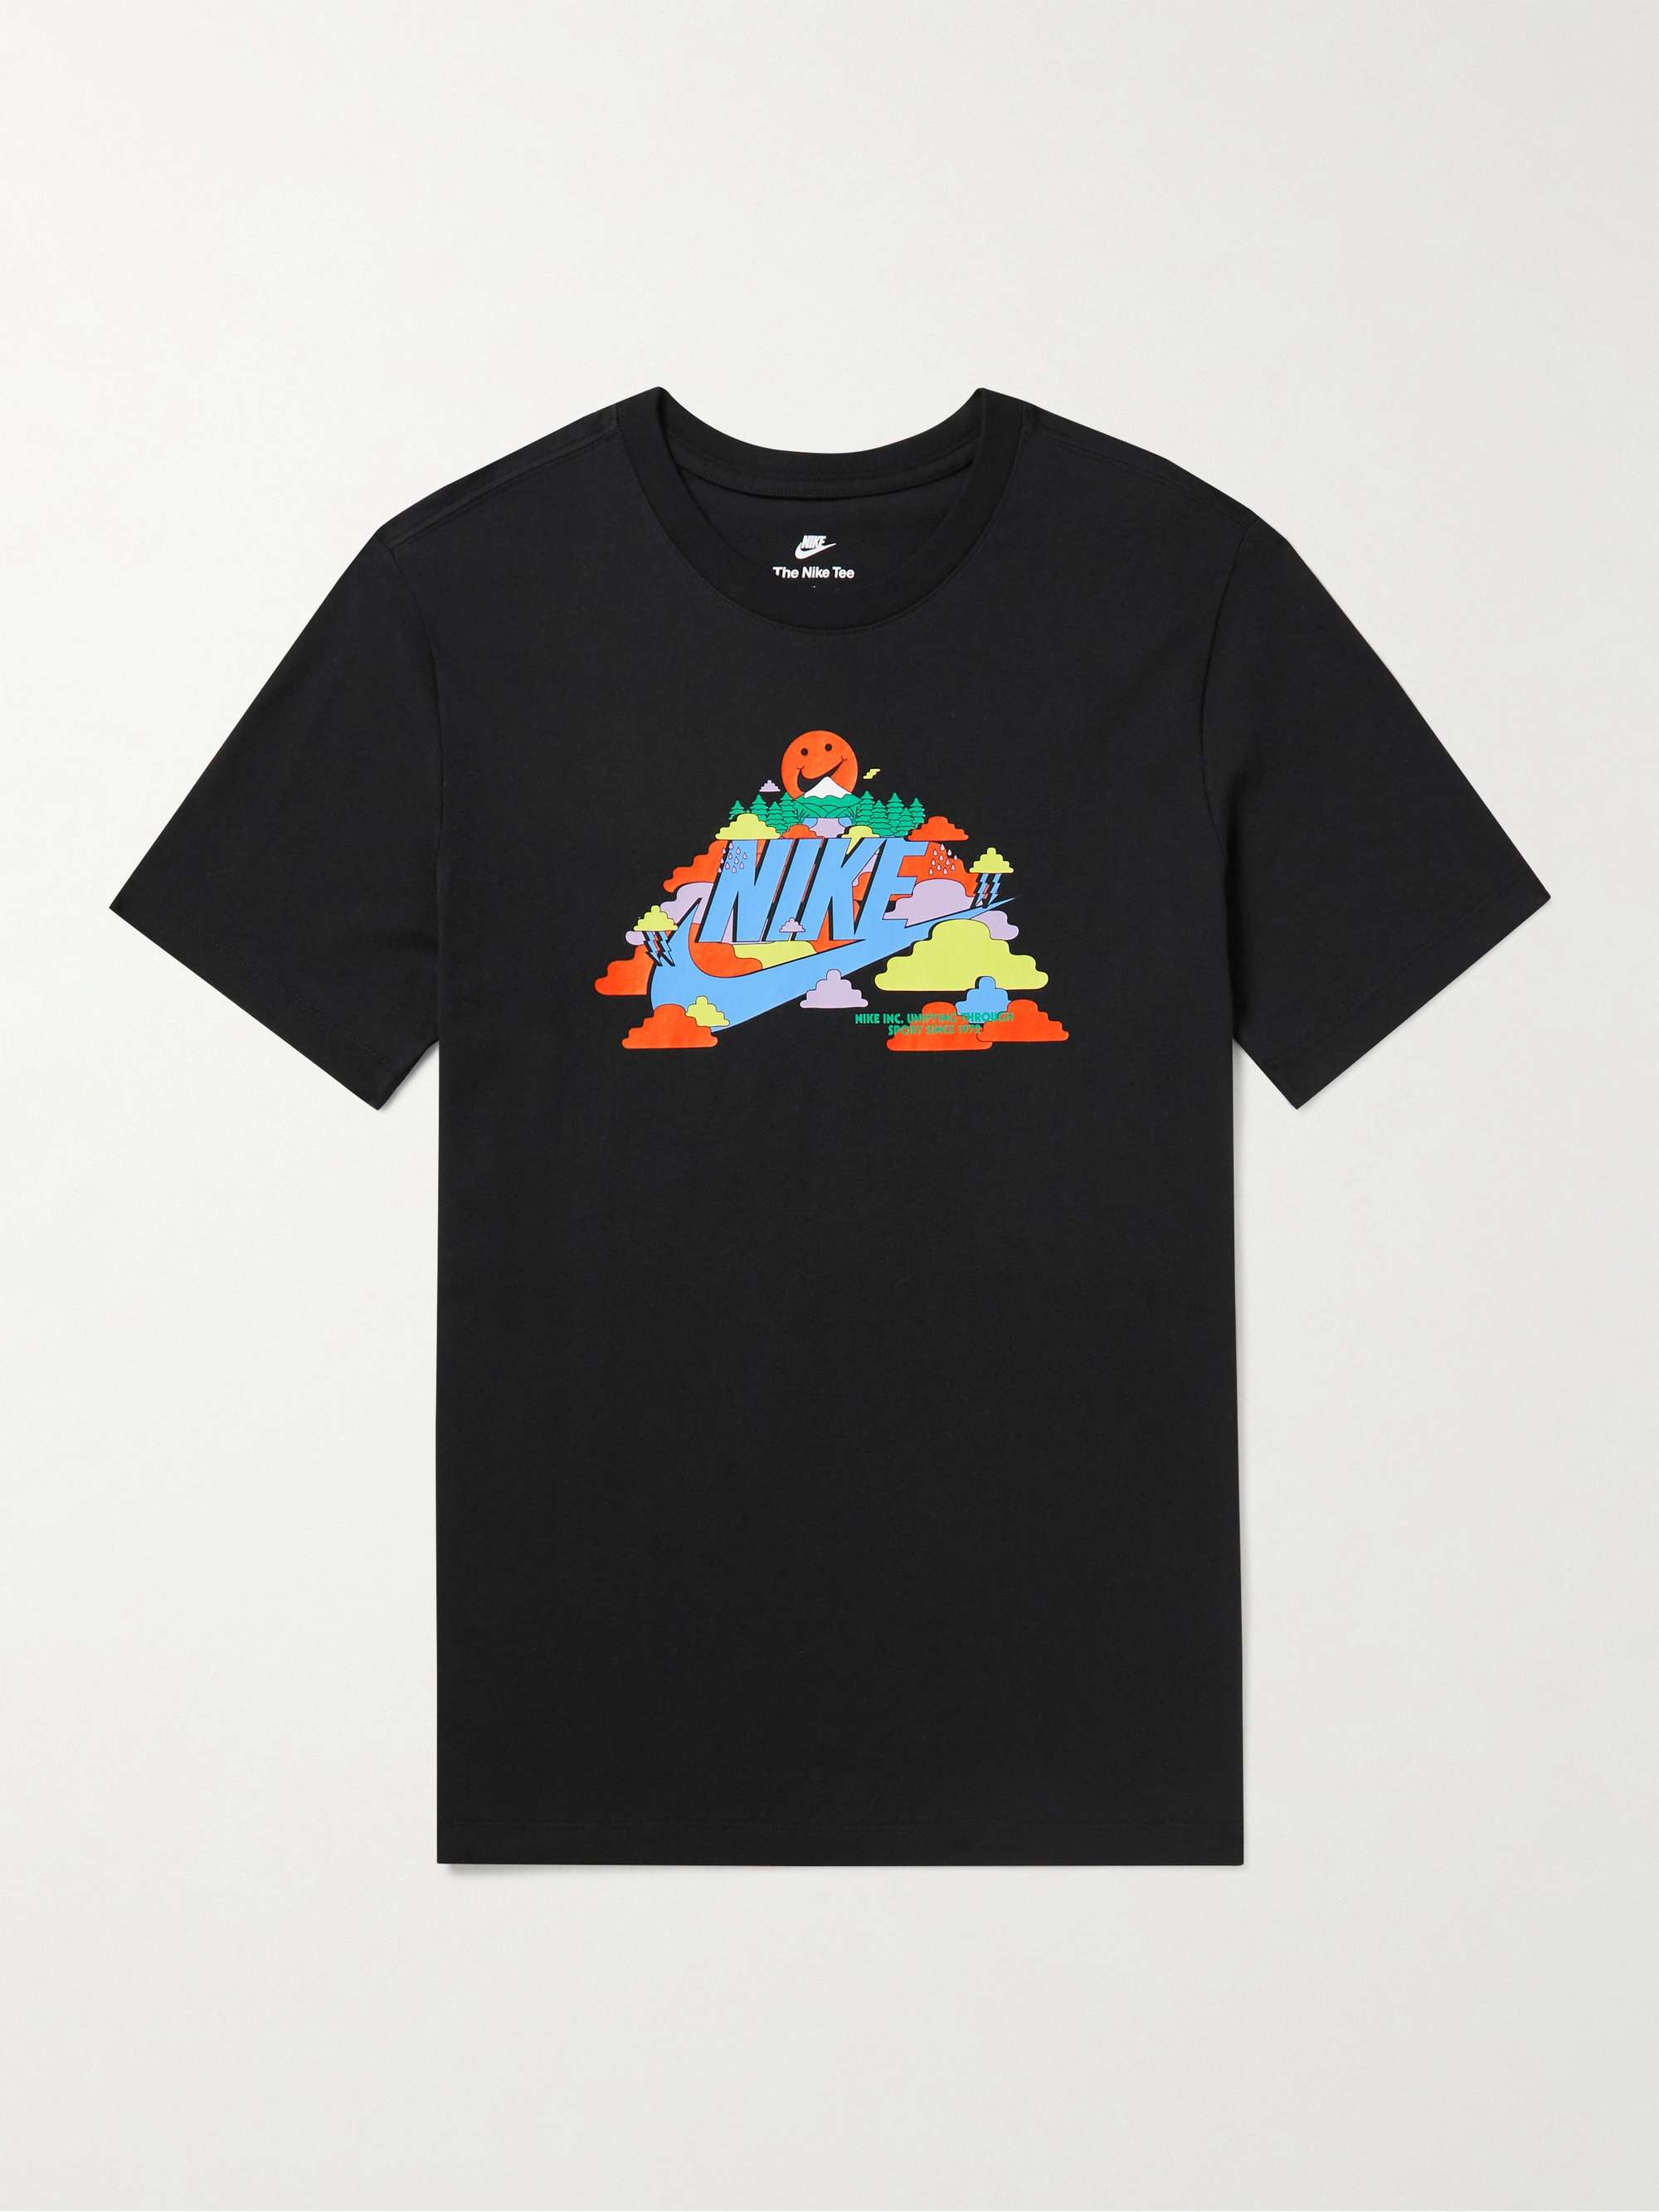 Black Slim-Fit Logo-Print Cotton-Jersey T-Shirt | NIKE | MR PORTER